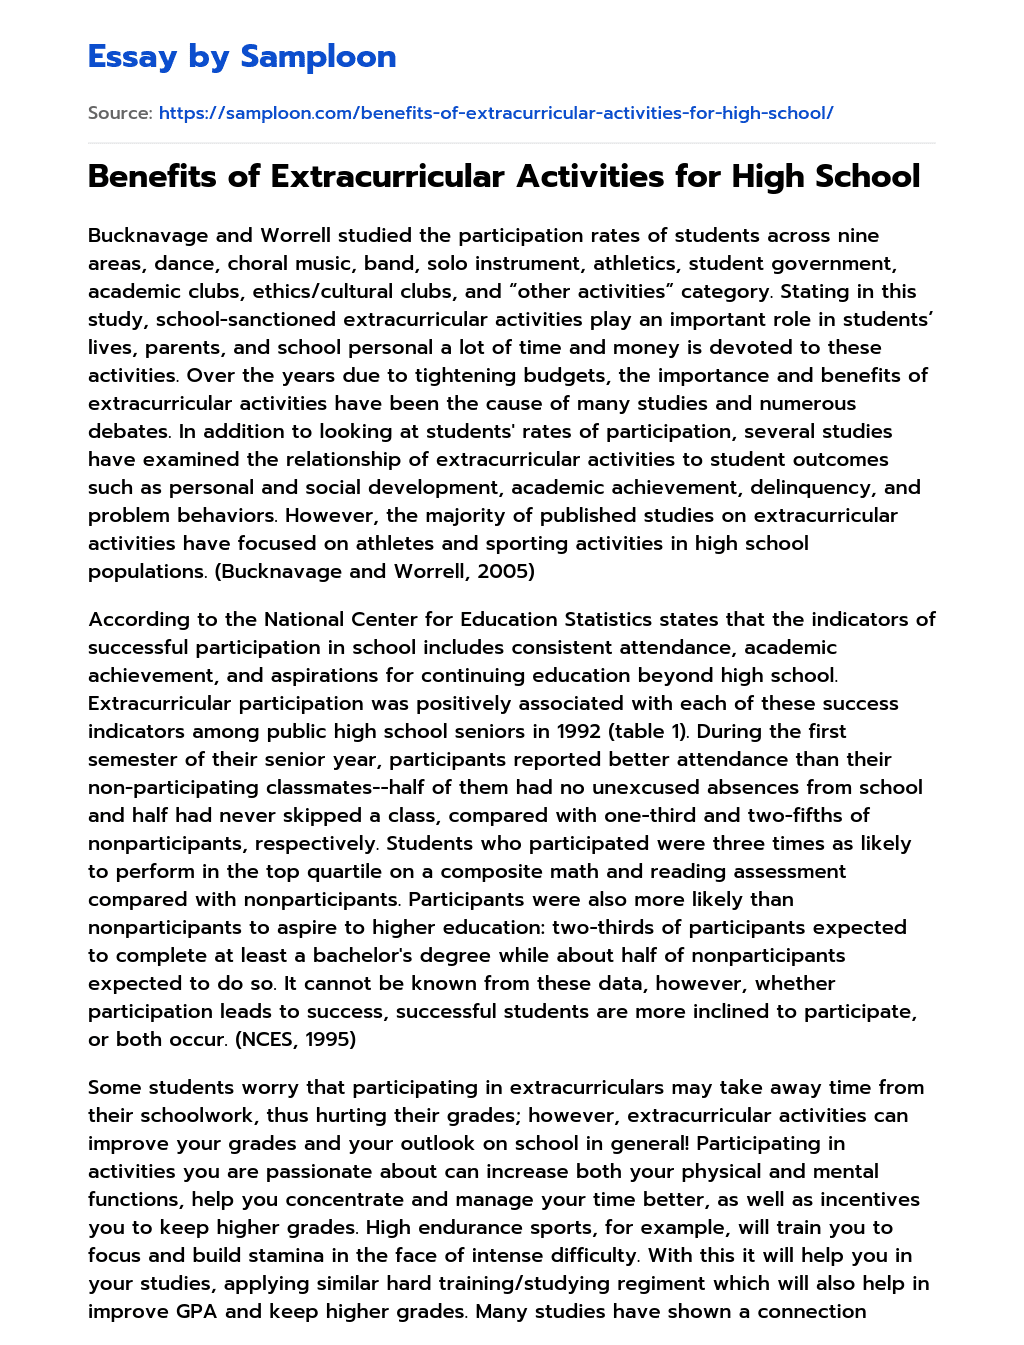 Benefits of Extracurricular Activities for High School essay